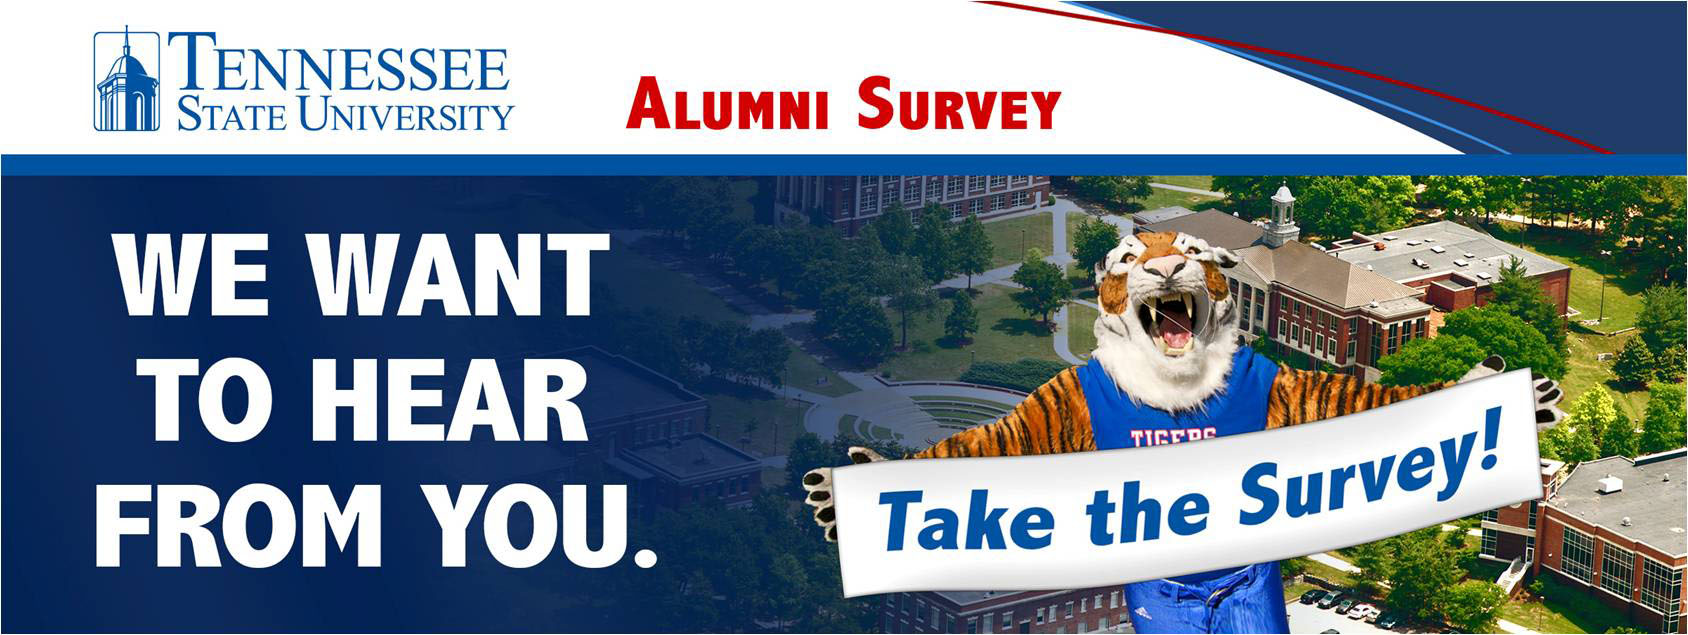 Take the Alumni Survey Graphic